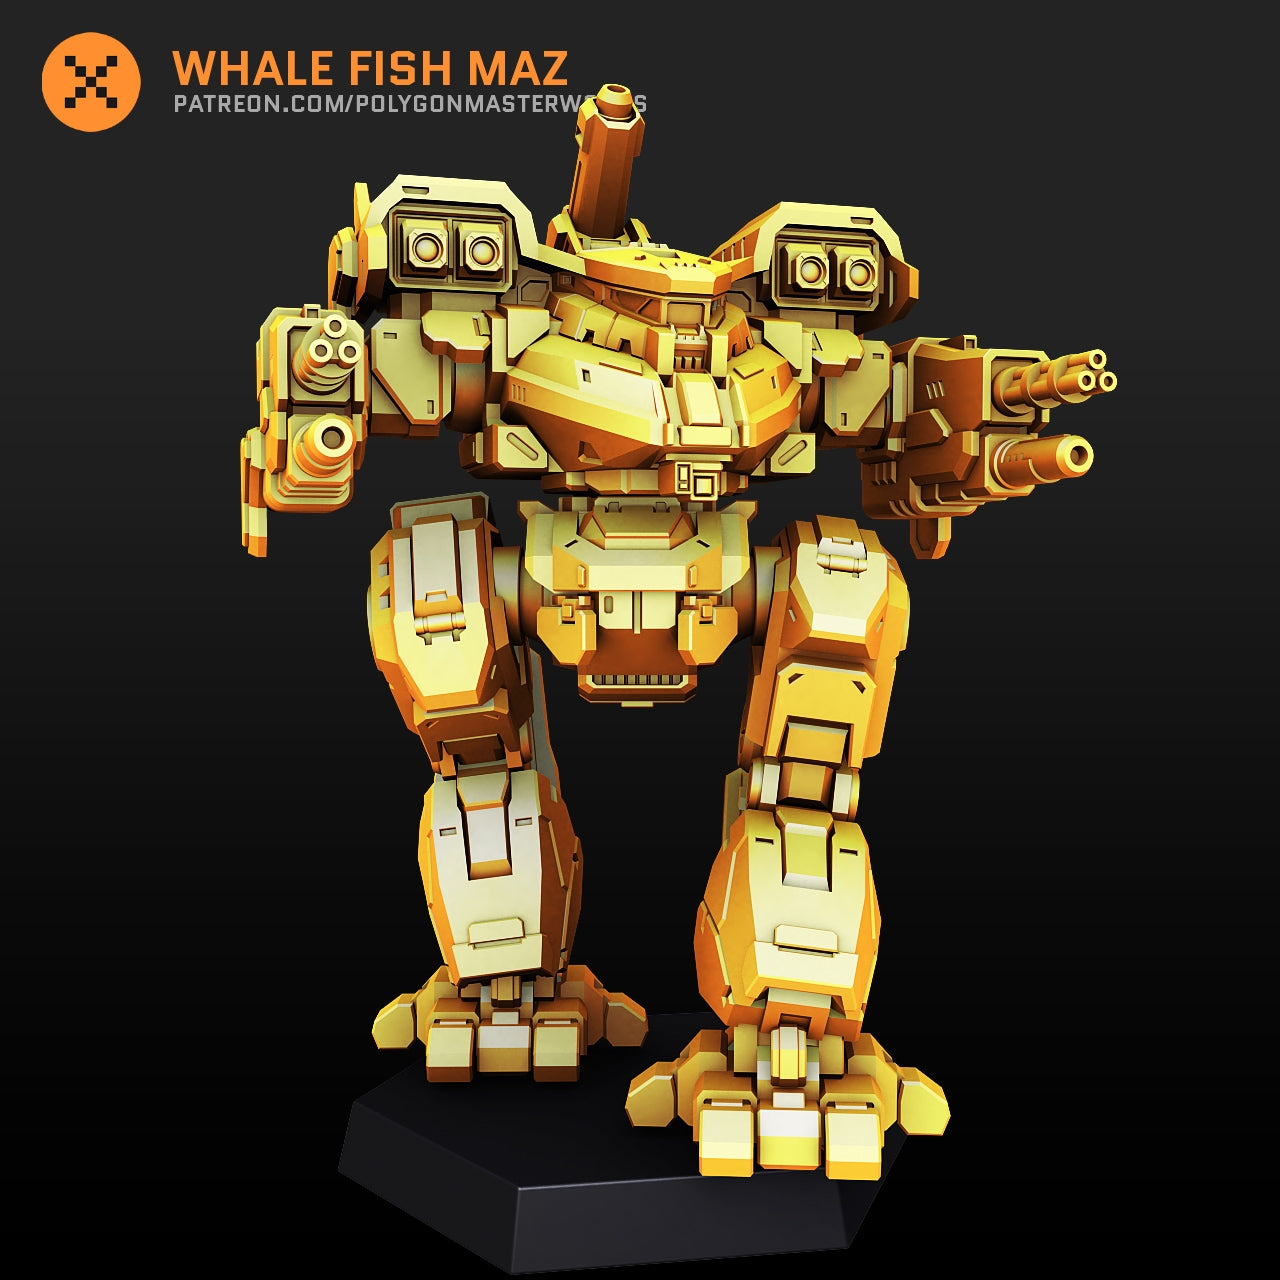 Whale Fish MAZ (By PMW) Alternate Battletech Mechwarrior Miniatures